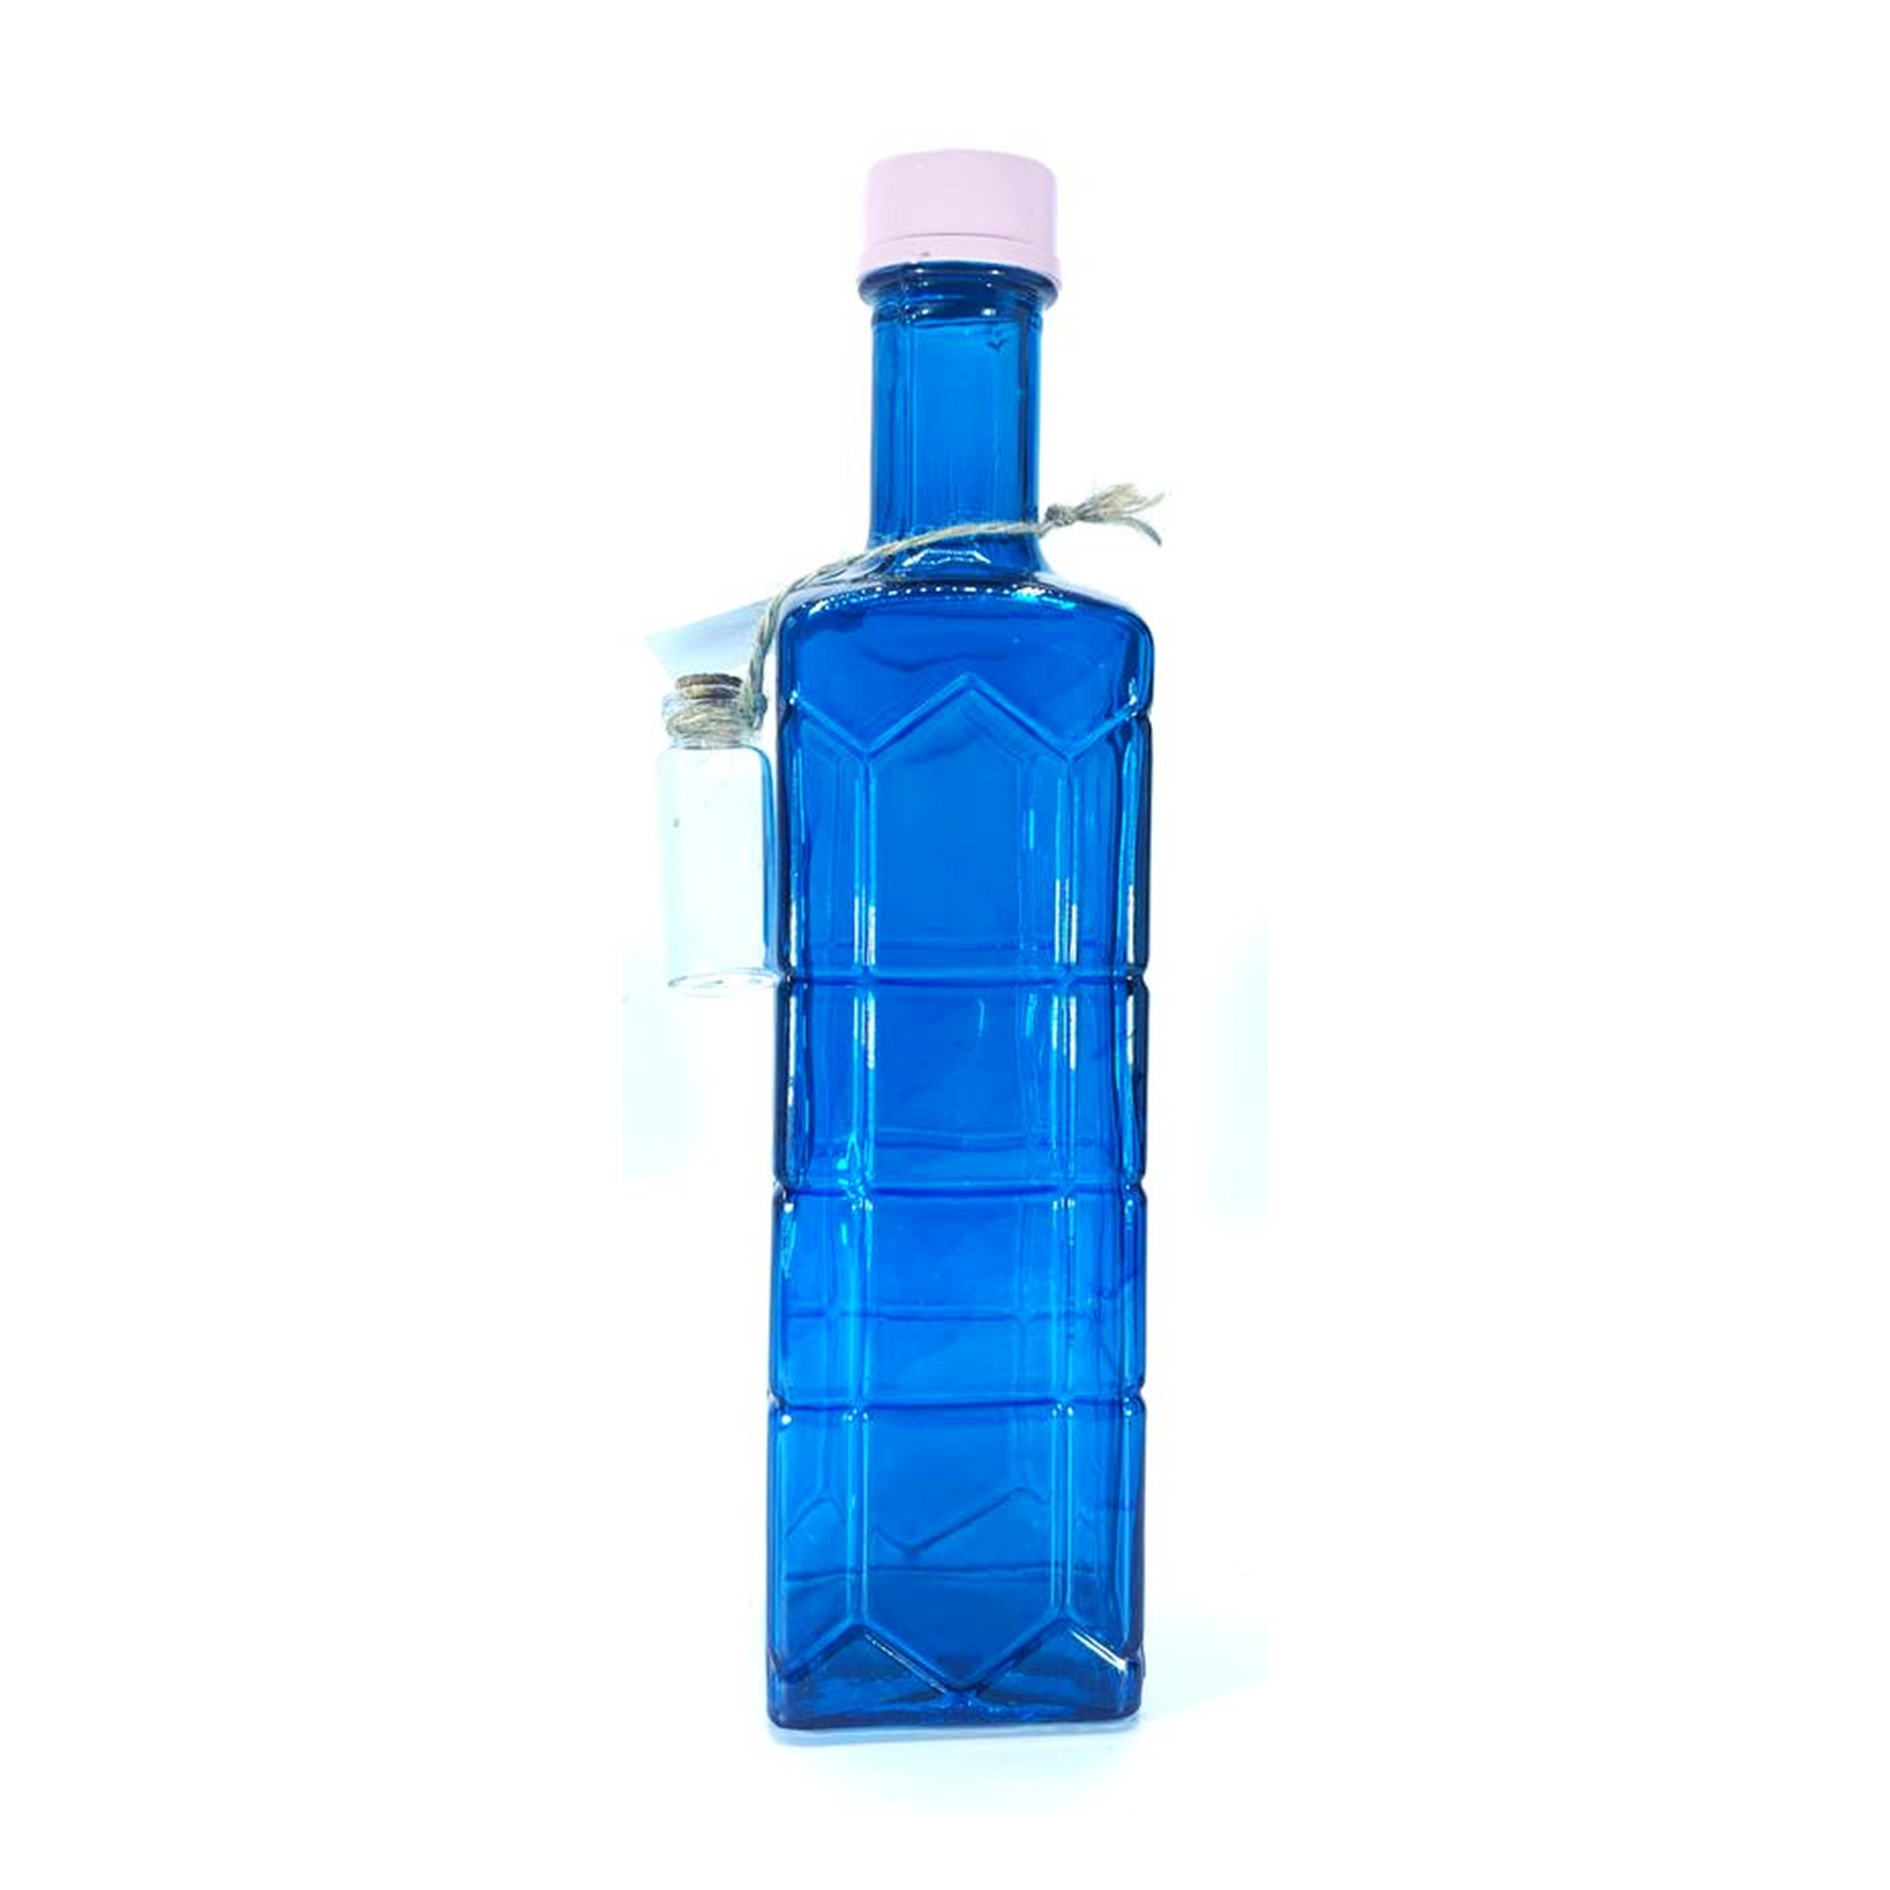 Kia glass bottle